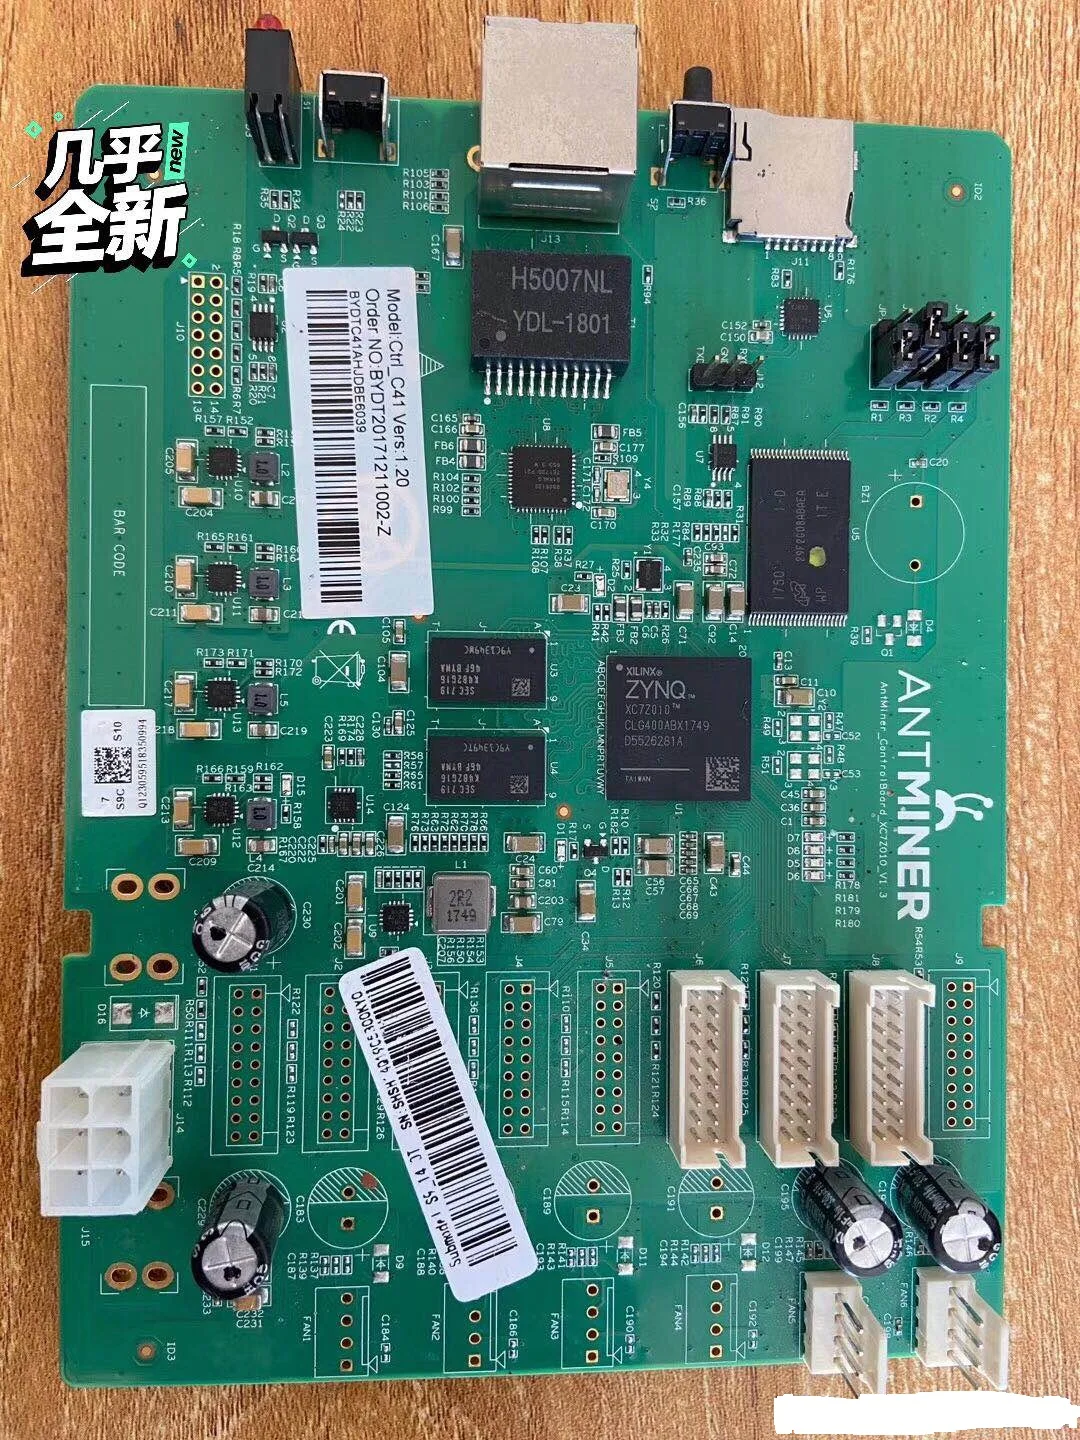 

Xilinx ZYNQ7010 Development Board, Xc7z010 FPGA, Complete Functions.